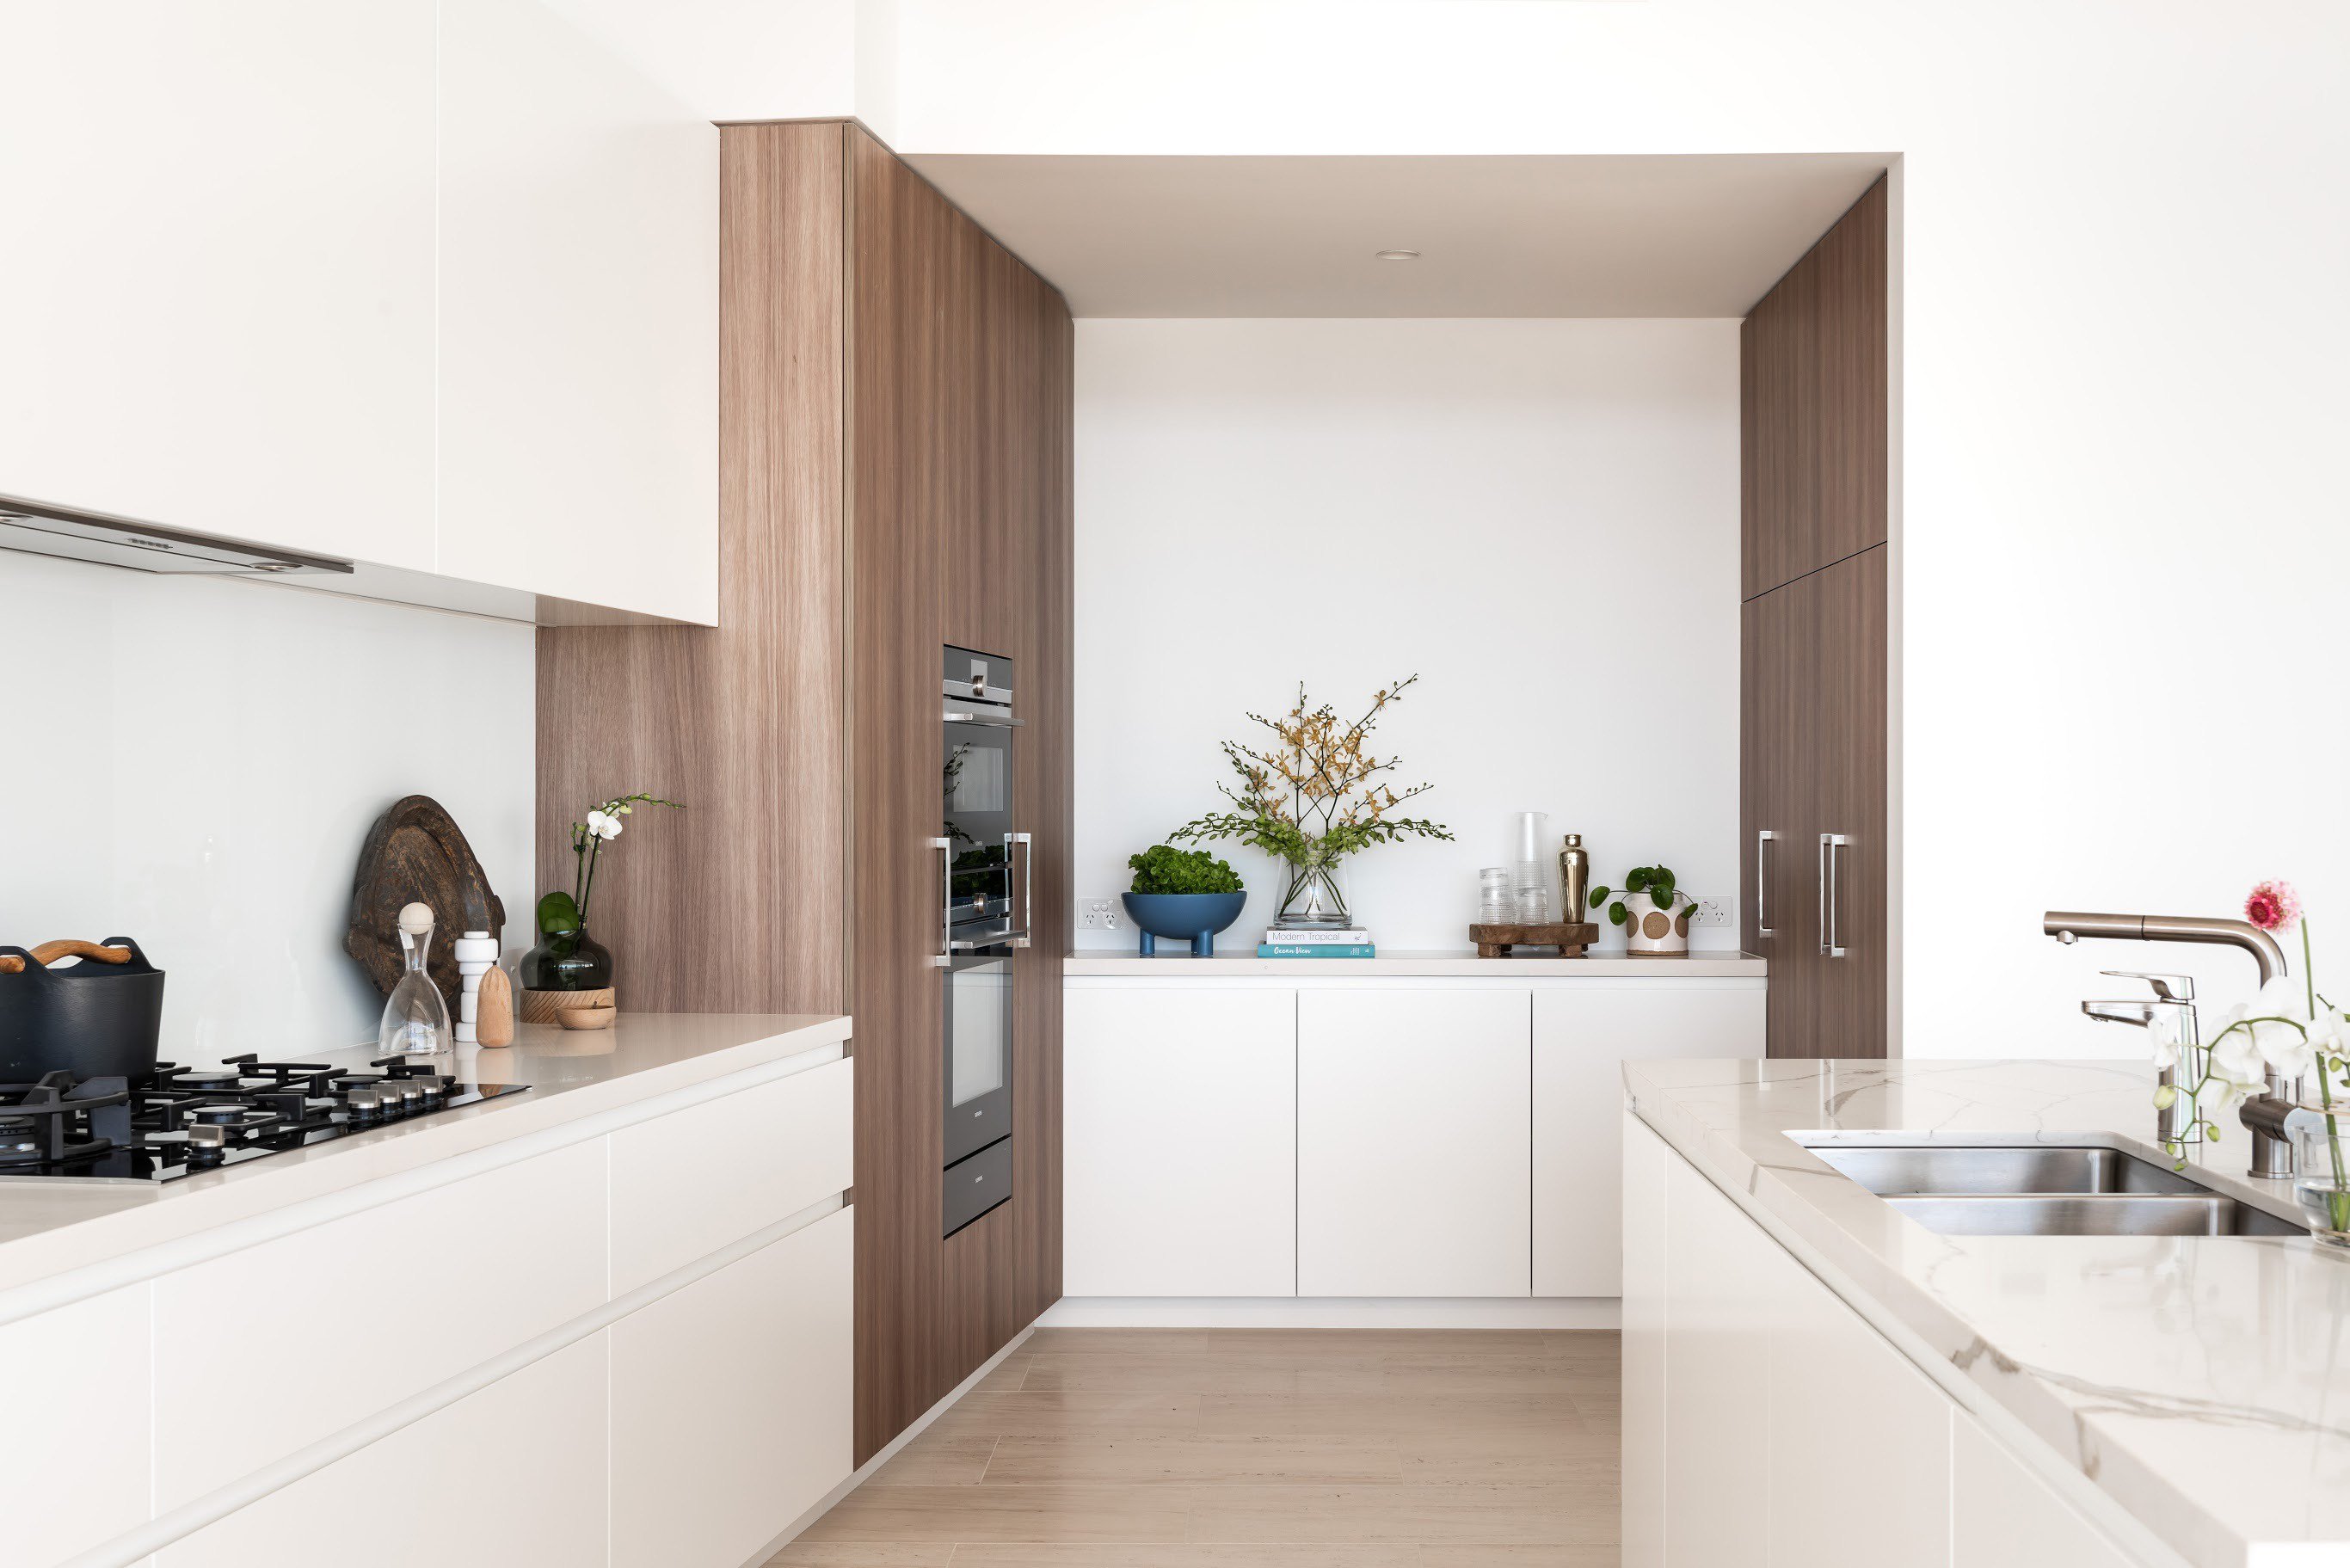 Modernist apartments - Overton Terraces - Braham architects - kitchen